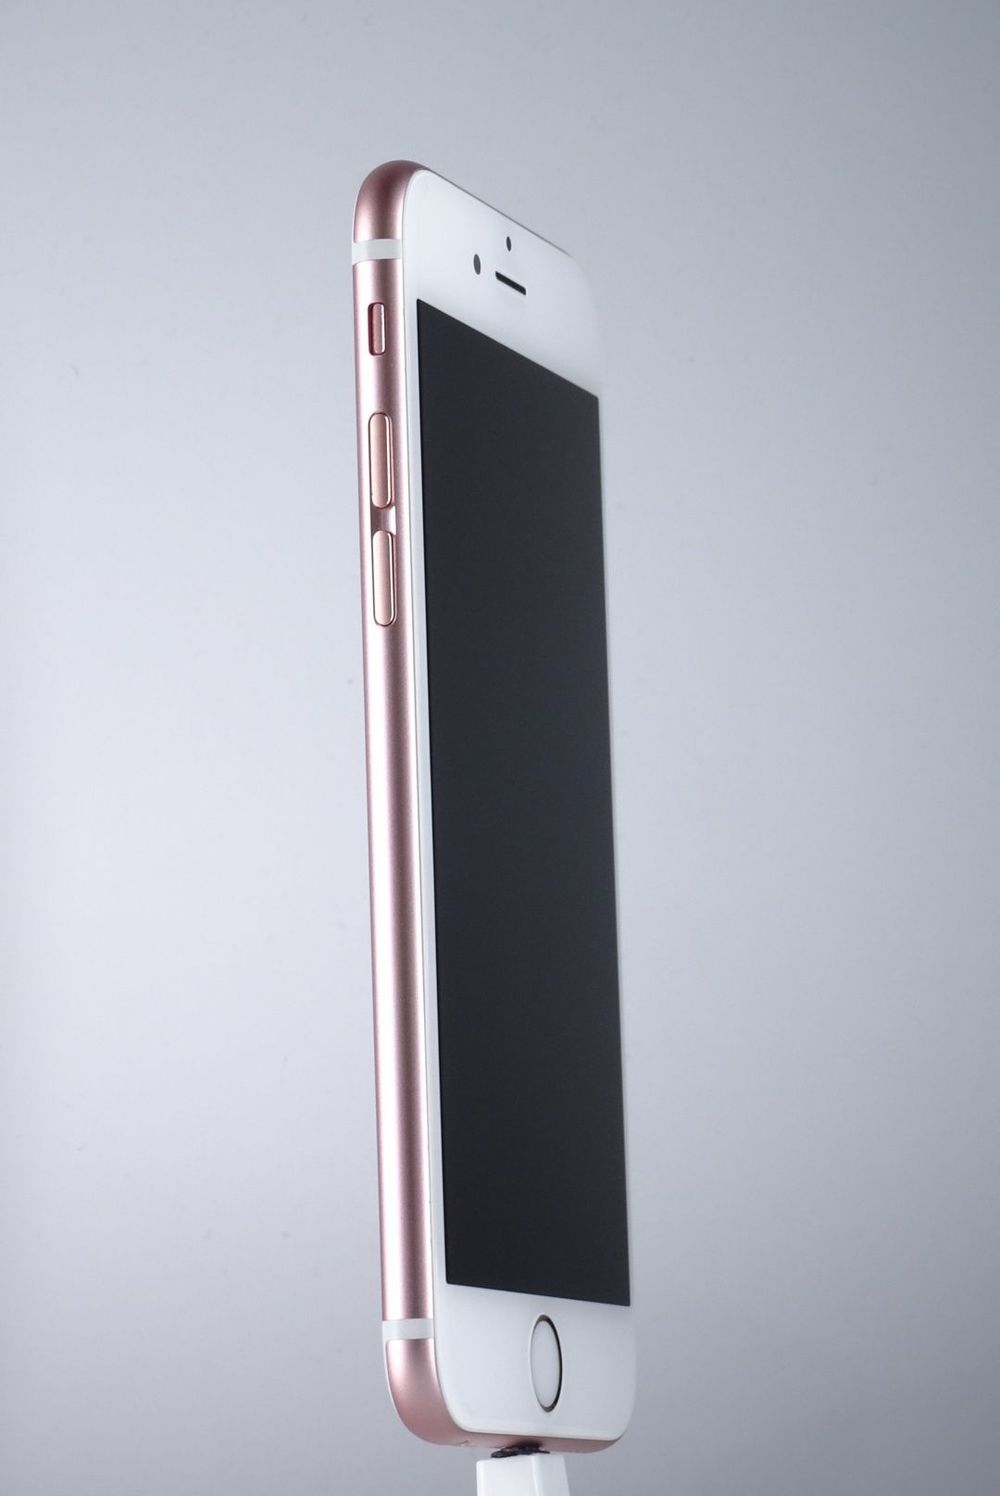 Telefon mobil Apple iPhone 6S, Rose Gold, 32 GB,  Ca Nou